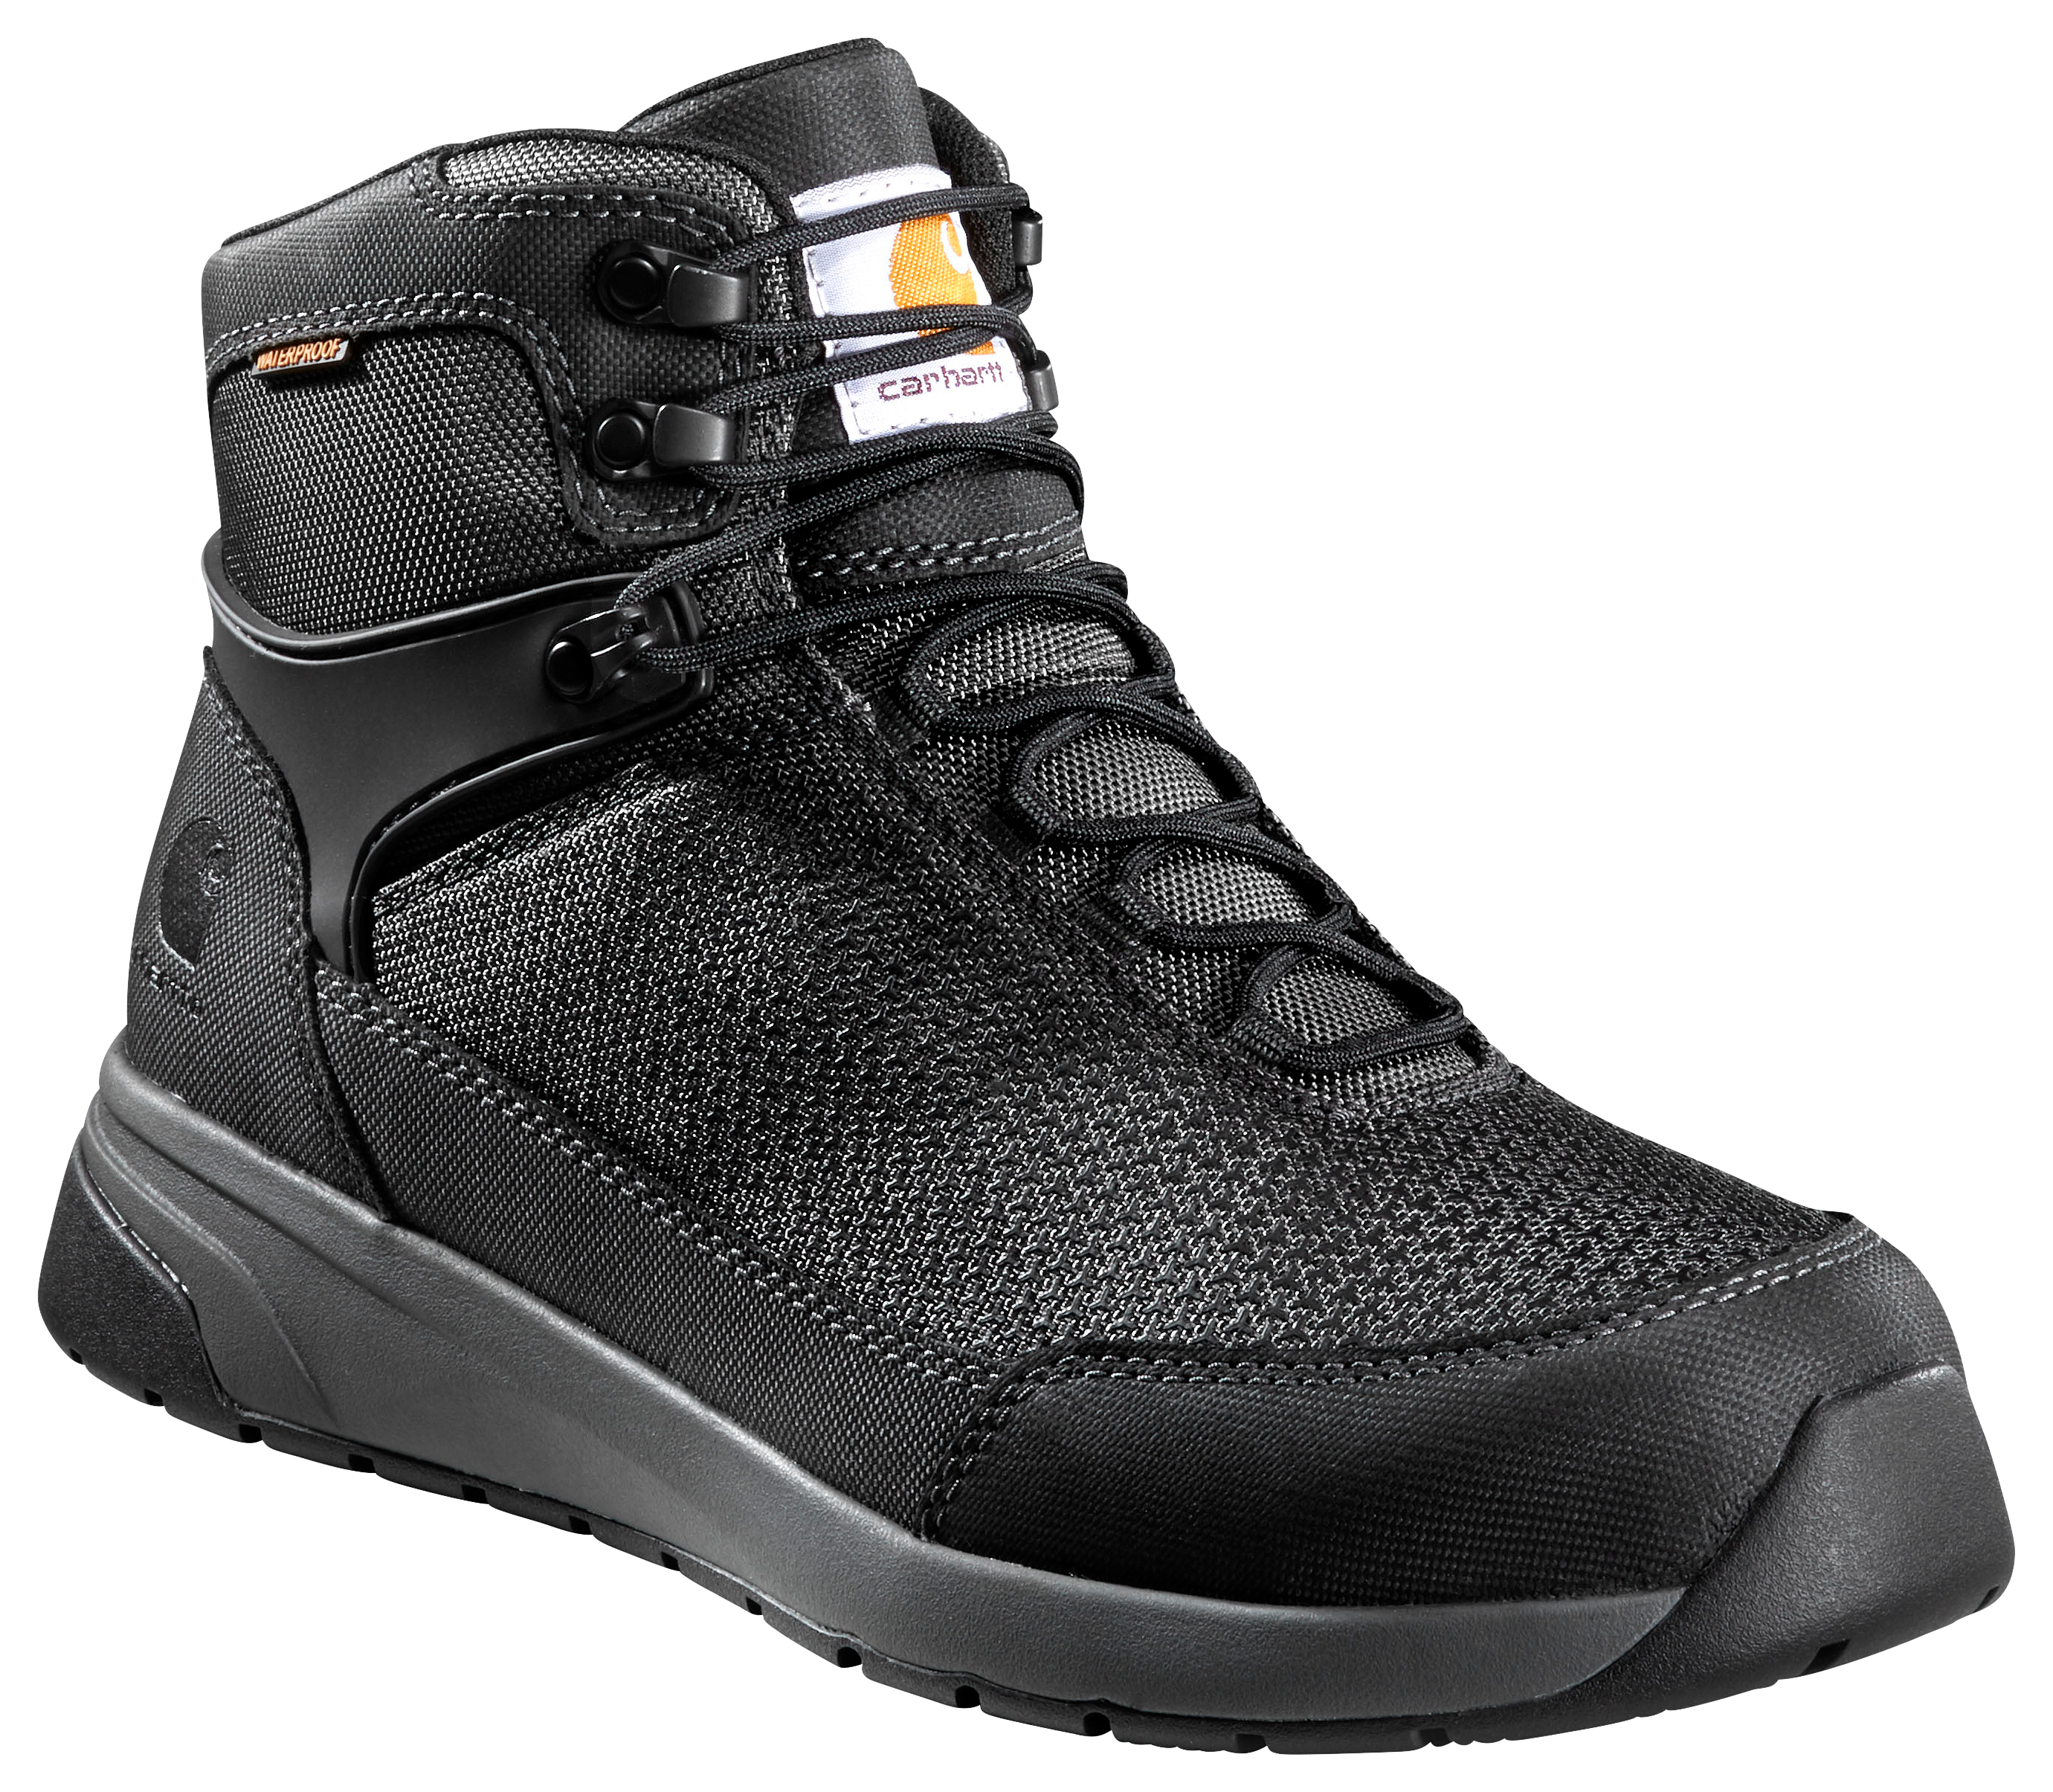 Carhartt Force 6"" Nano Composite-Toe Work Boots for Men - Black - 11M